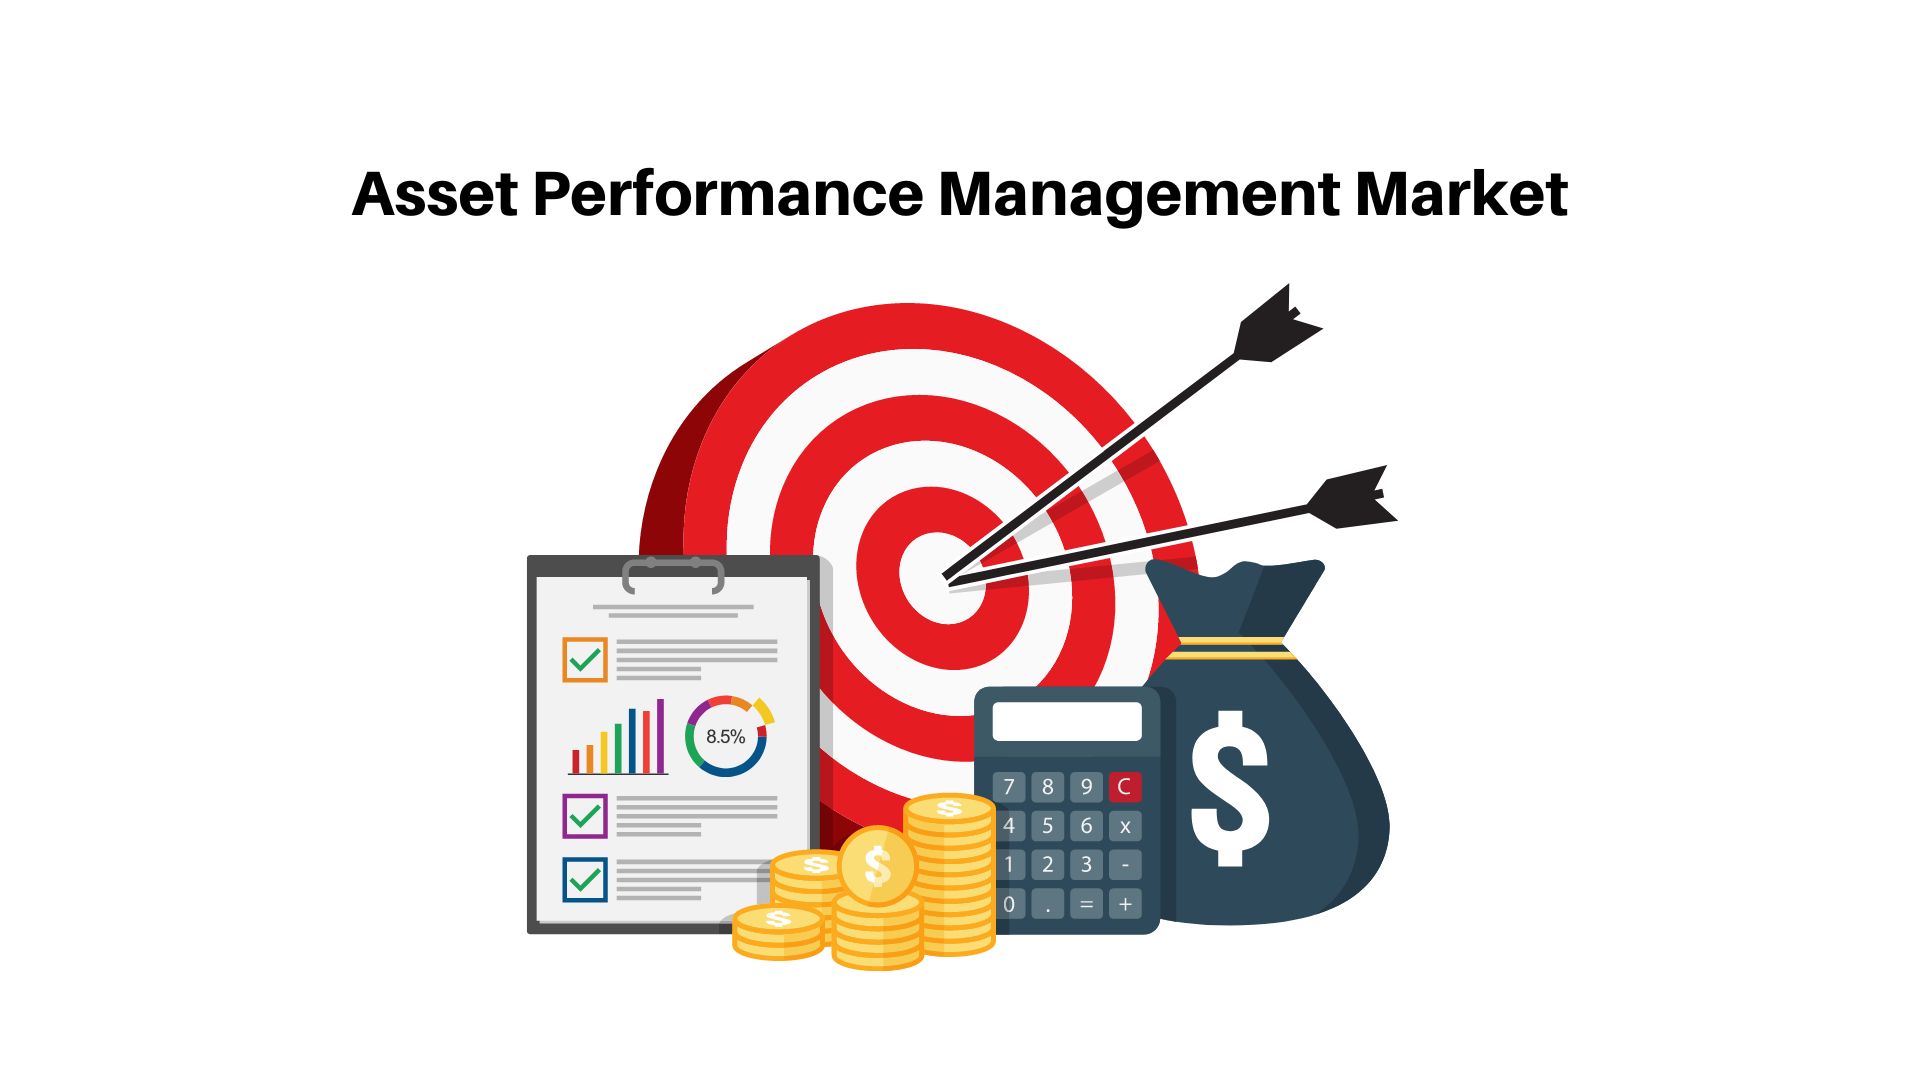 Asset Performance Management Market to Hit USD 9.13 Billion by 2032